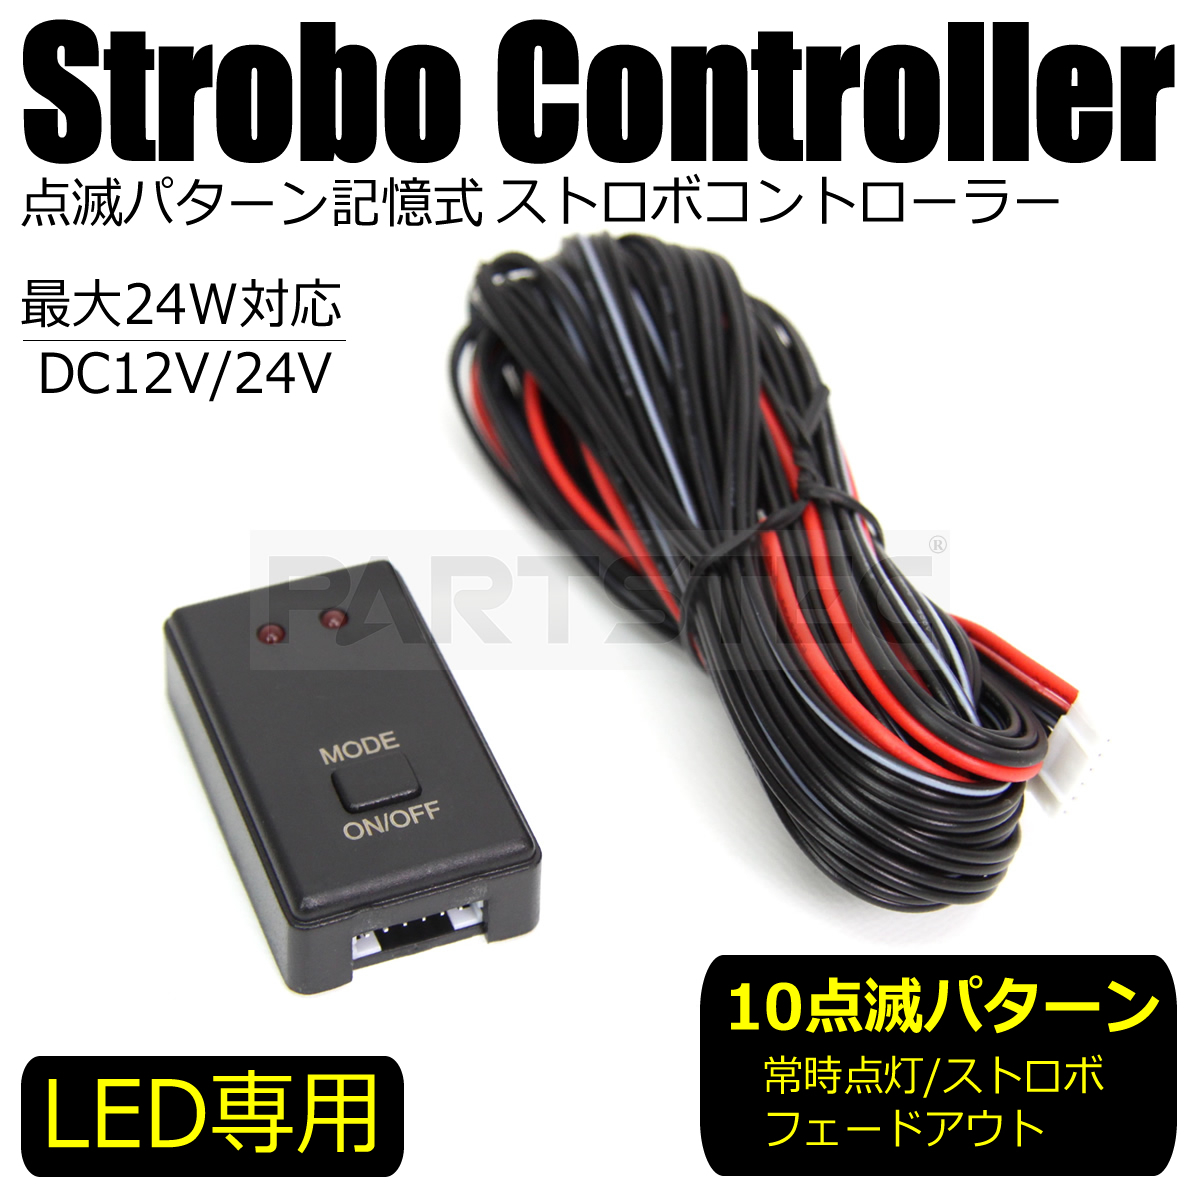 12V 24V 兼用 LED ストロボ コントローラー ユニット フラッシュ 点滅 全10パターン 記憶機能付 簡易説明書付 / 20-18 R-1_画像1